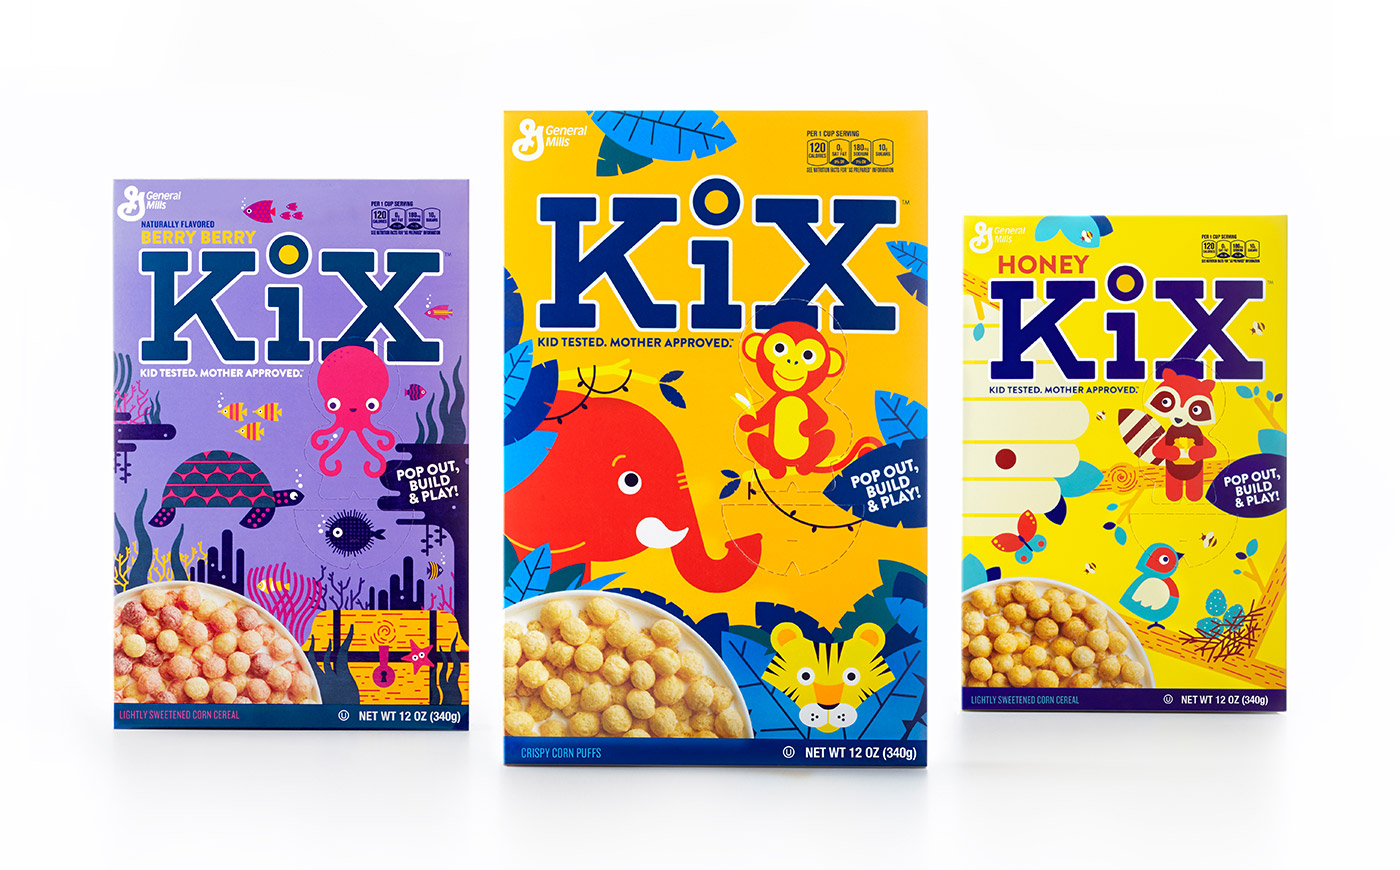 Kix boxes 3 up